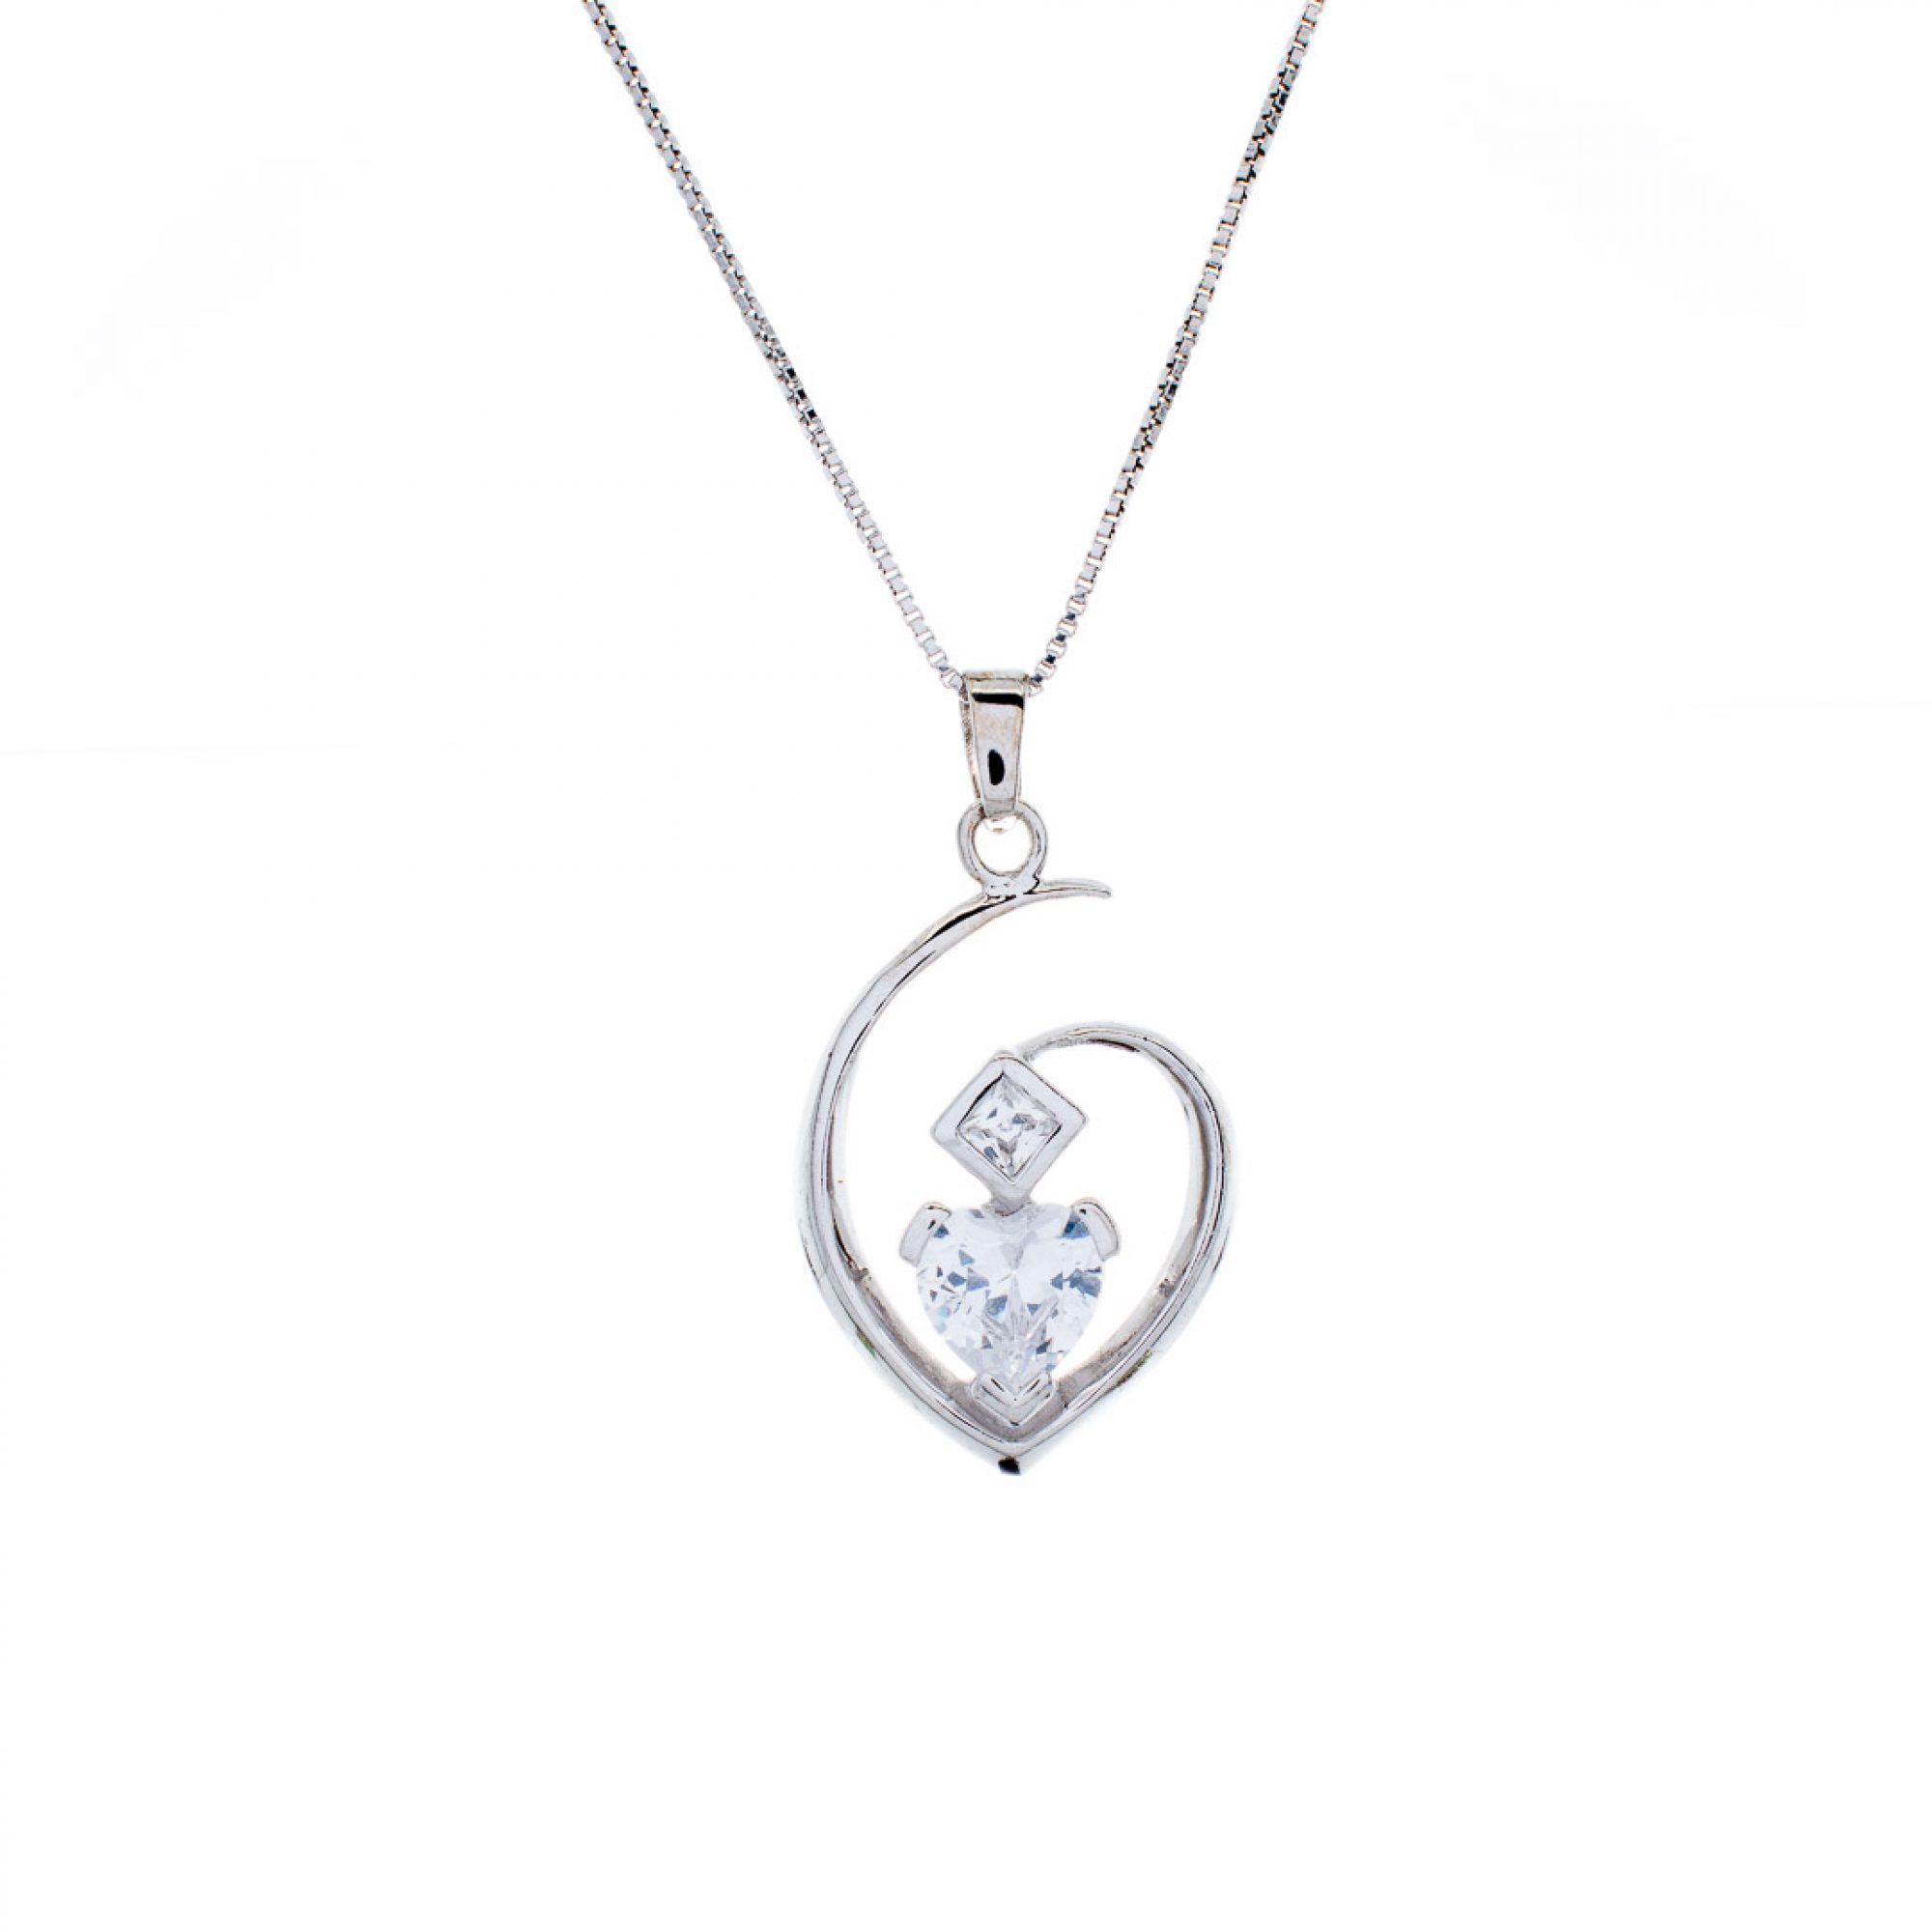 Heart necklace with zircon stones